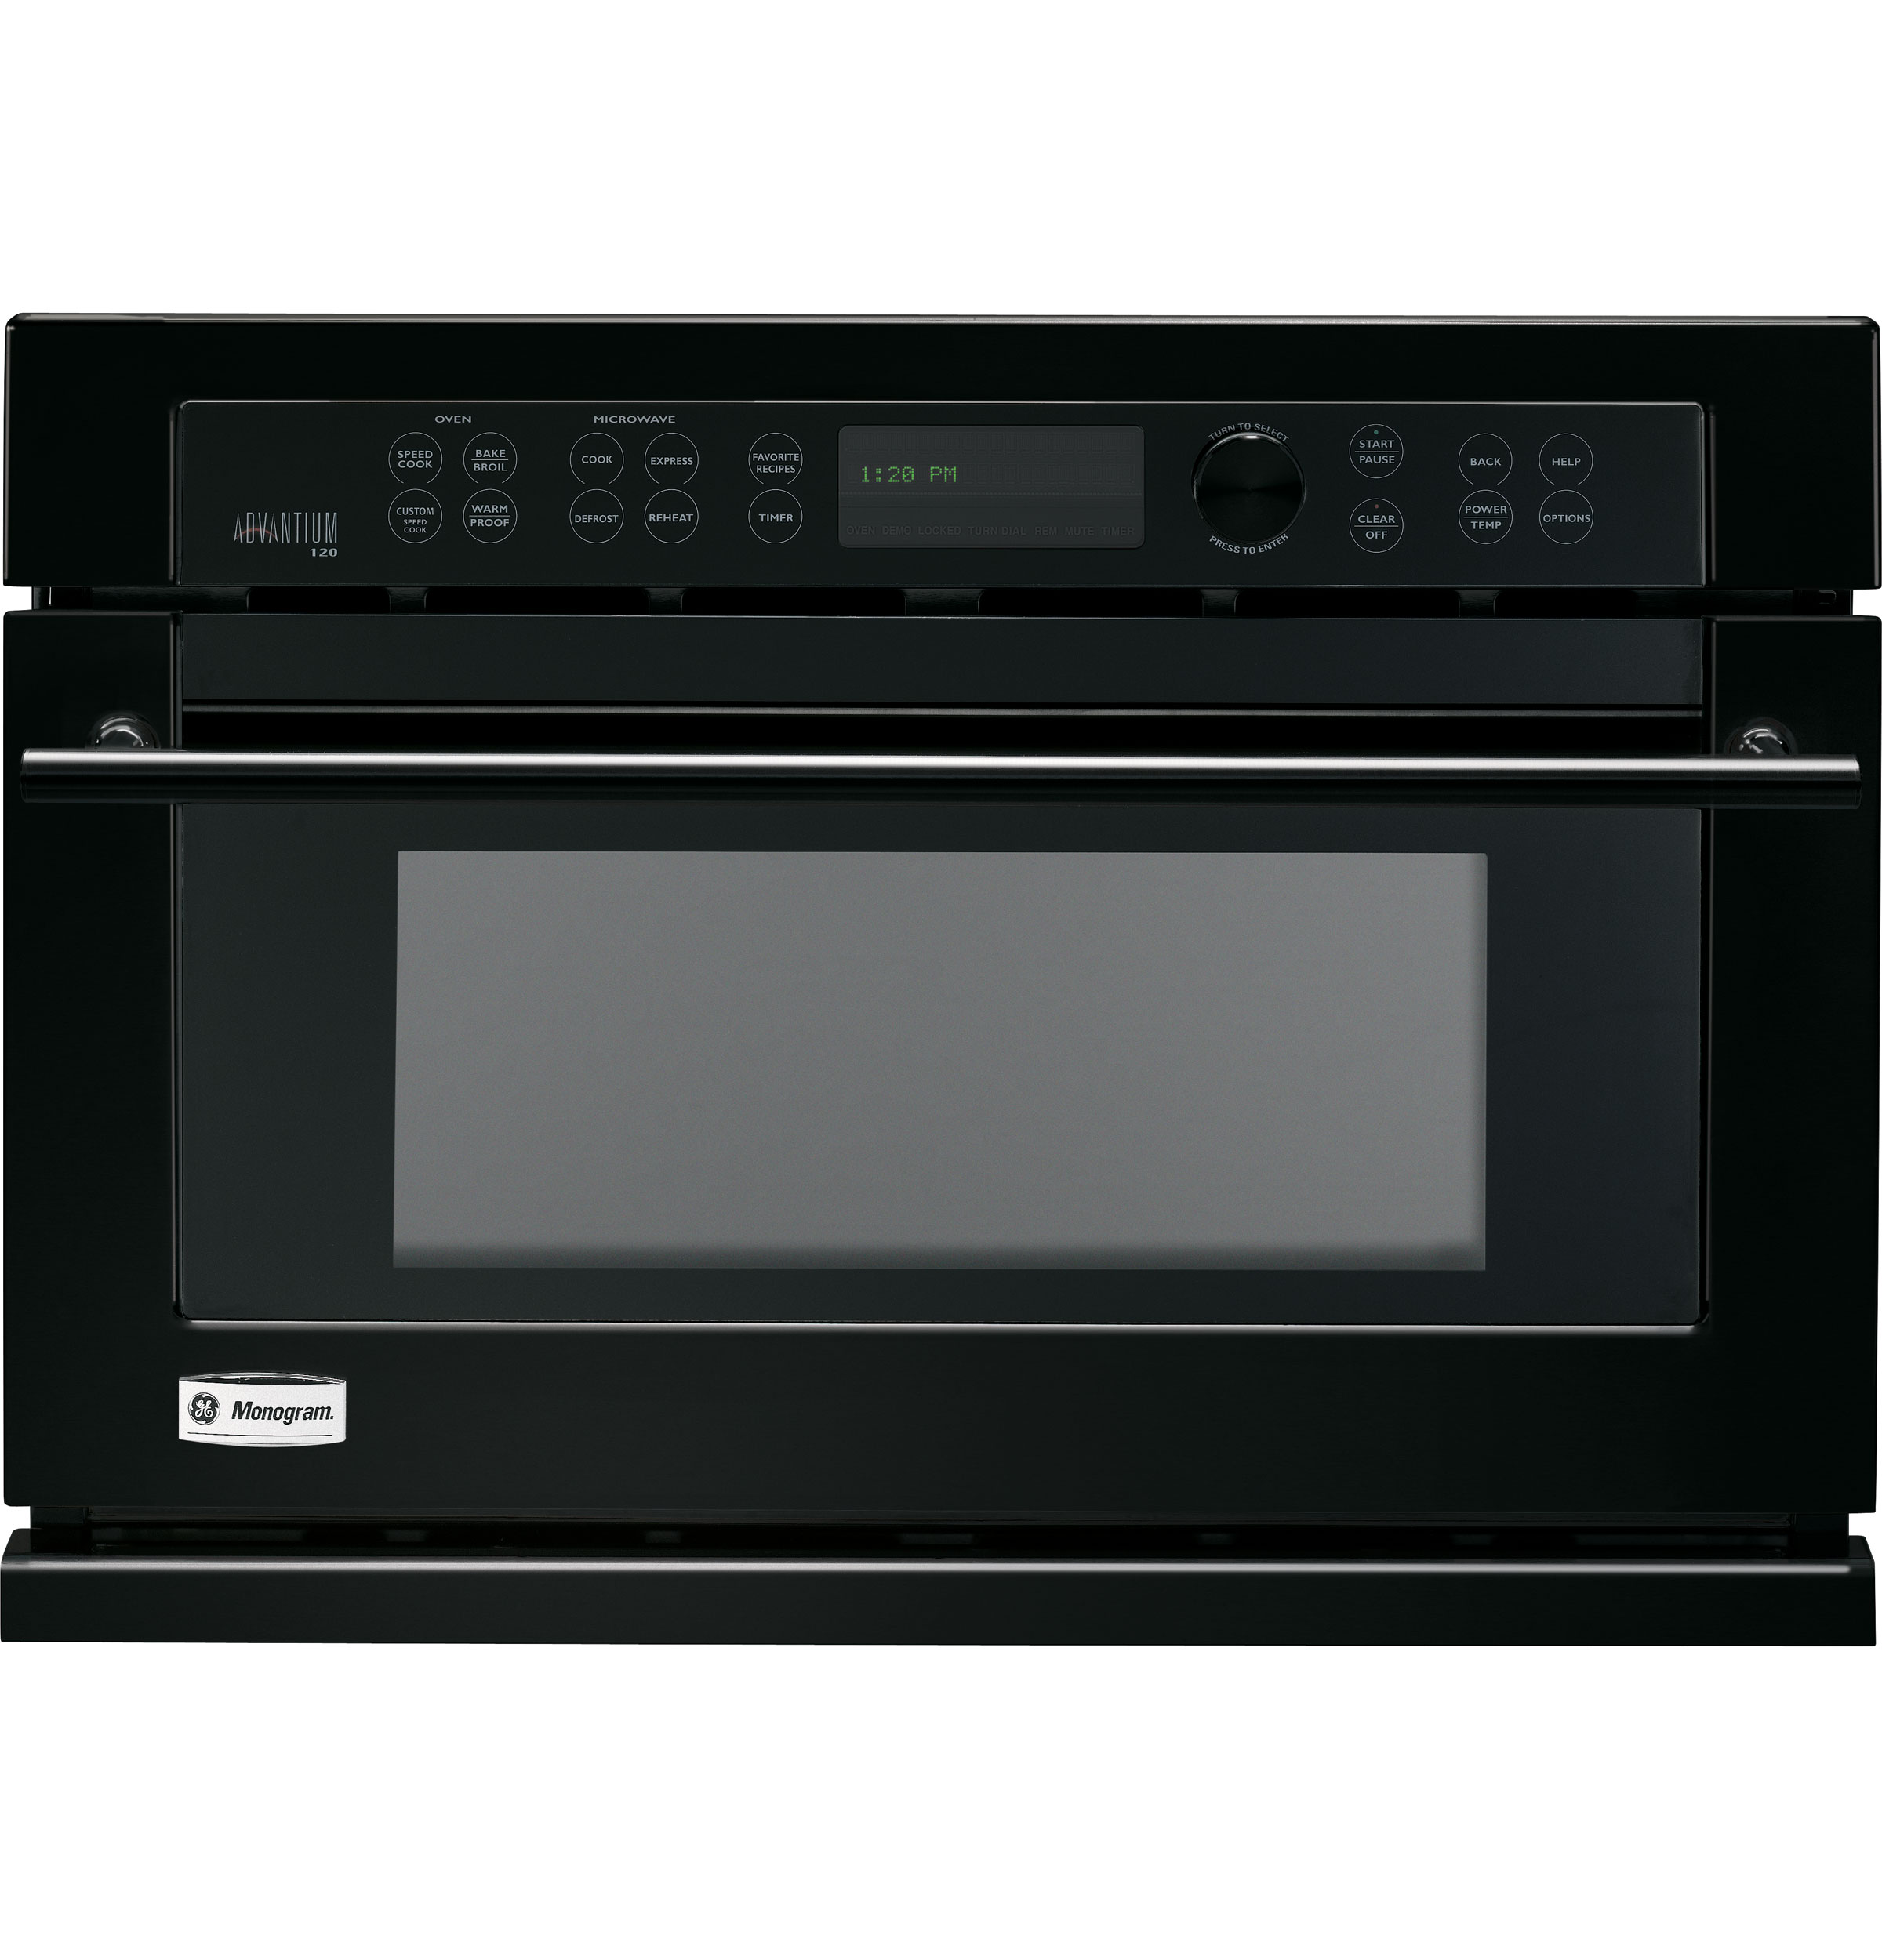 GE Monogram® Built-In Oven with Advantium® Speedcook Technology- 120V